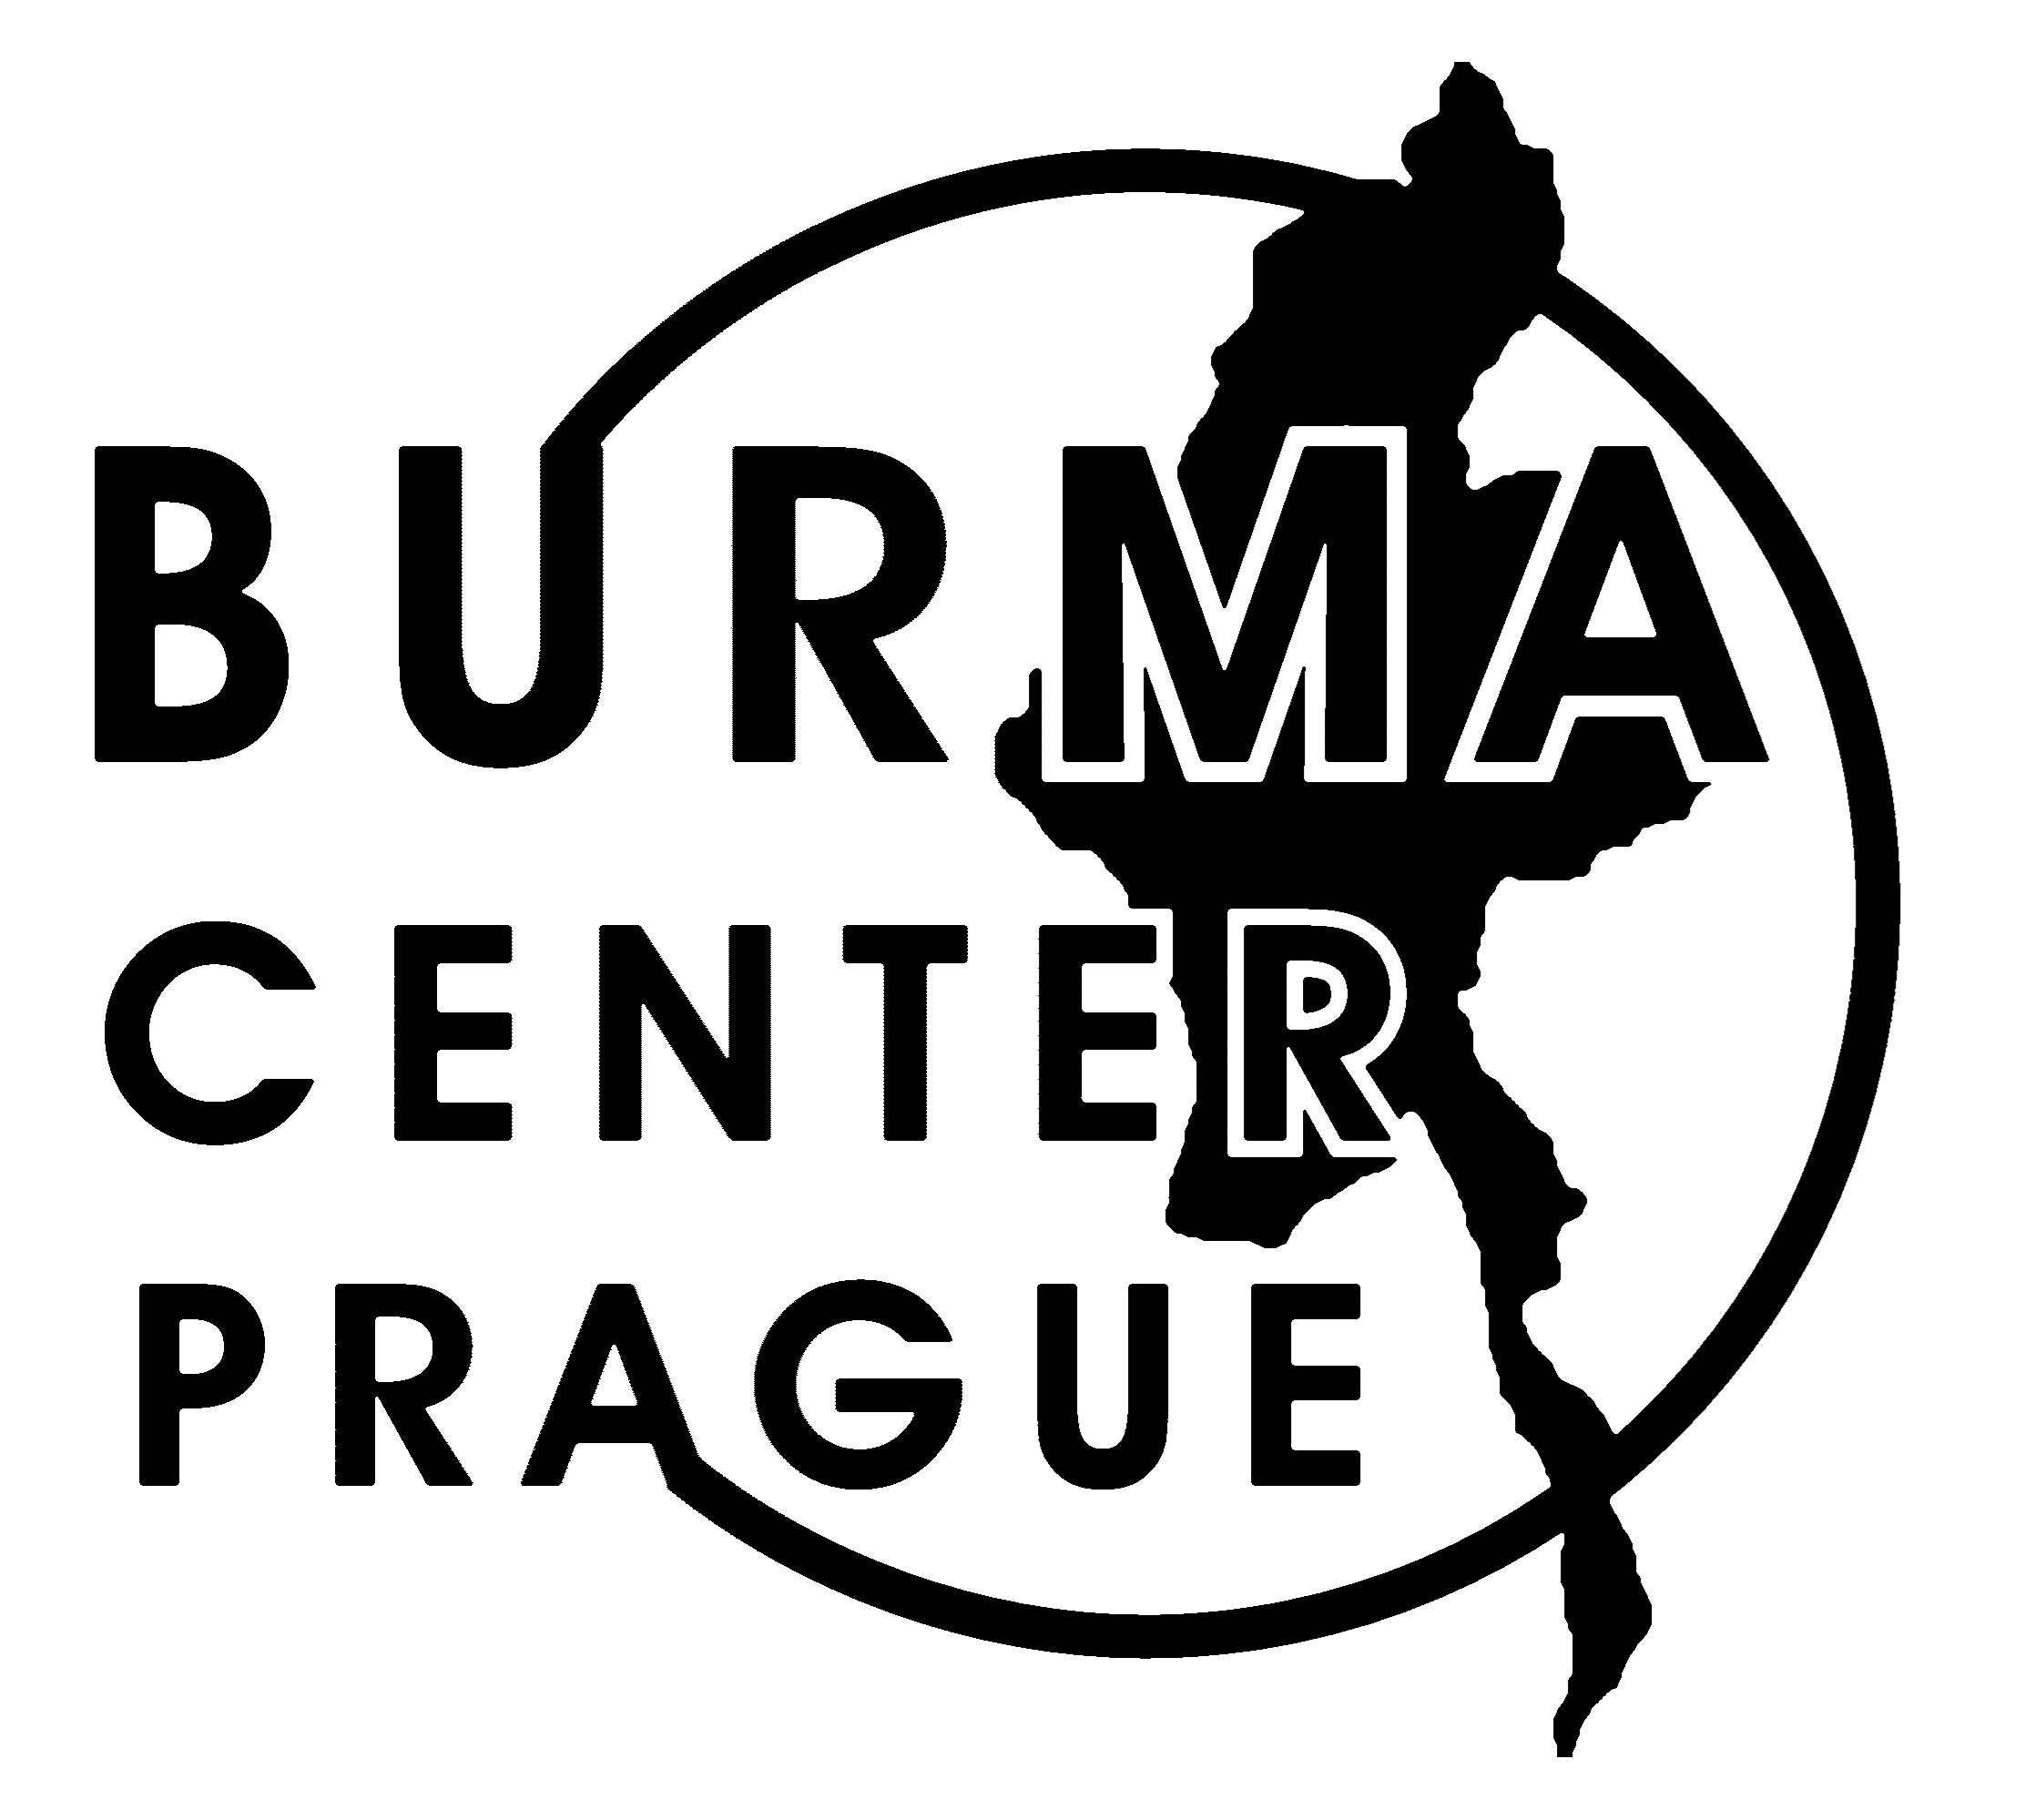 (c) Burma-center.org